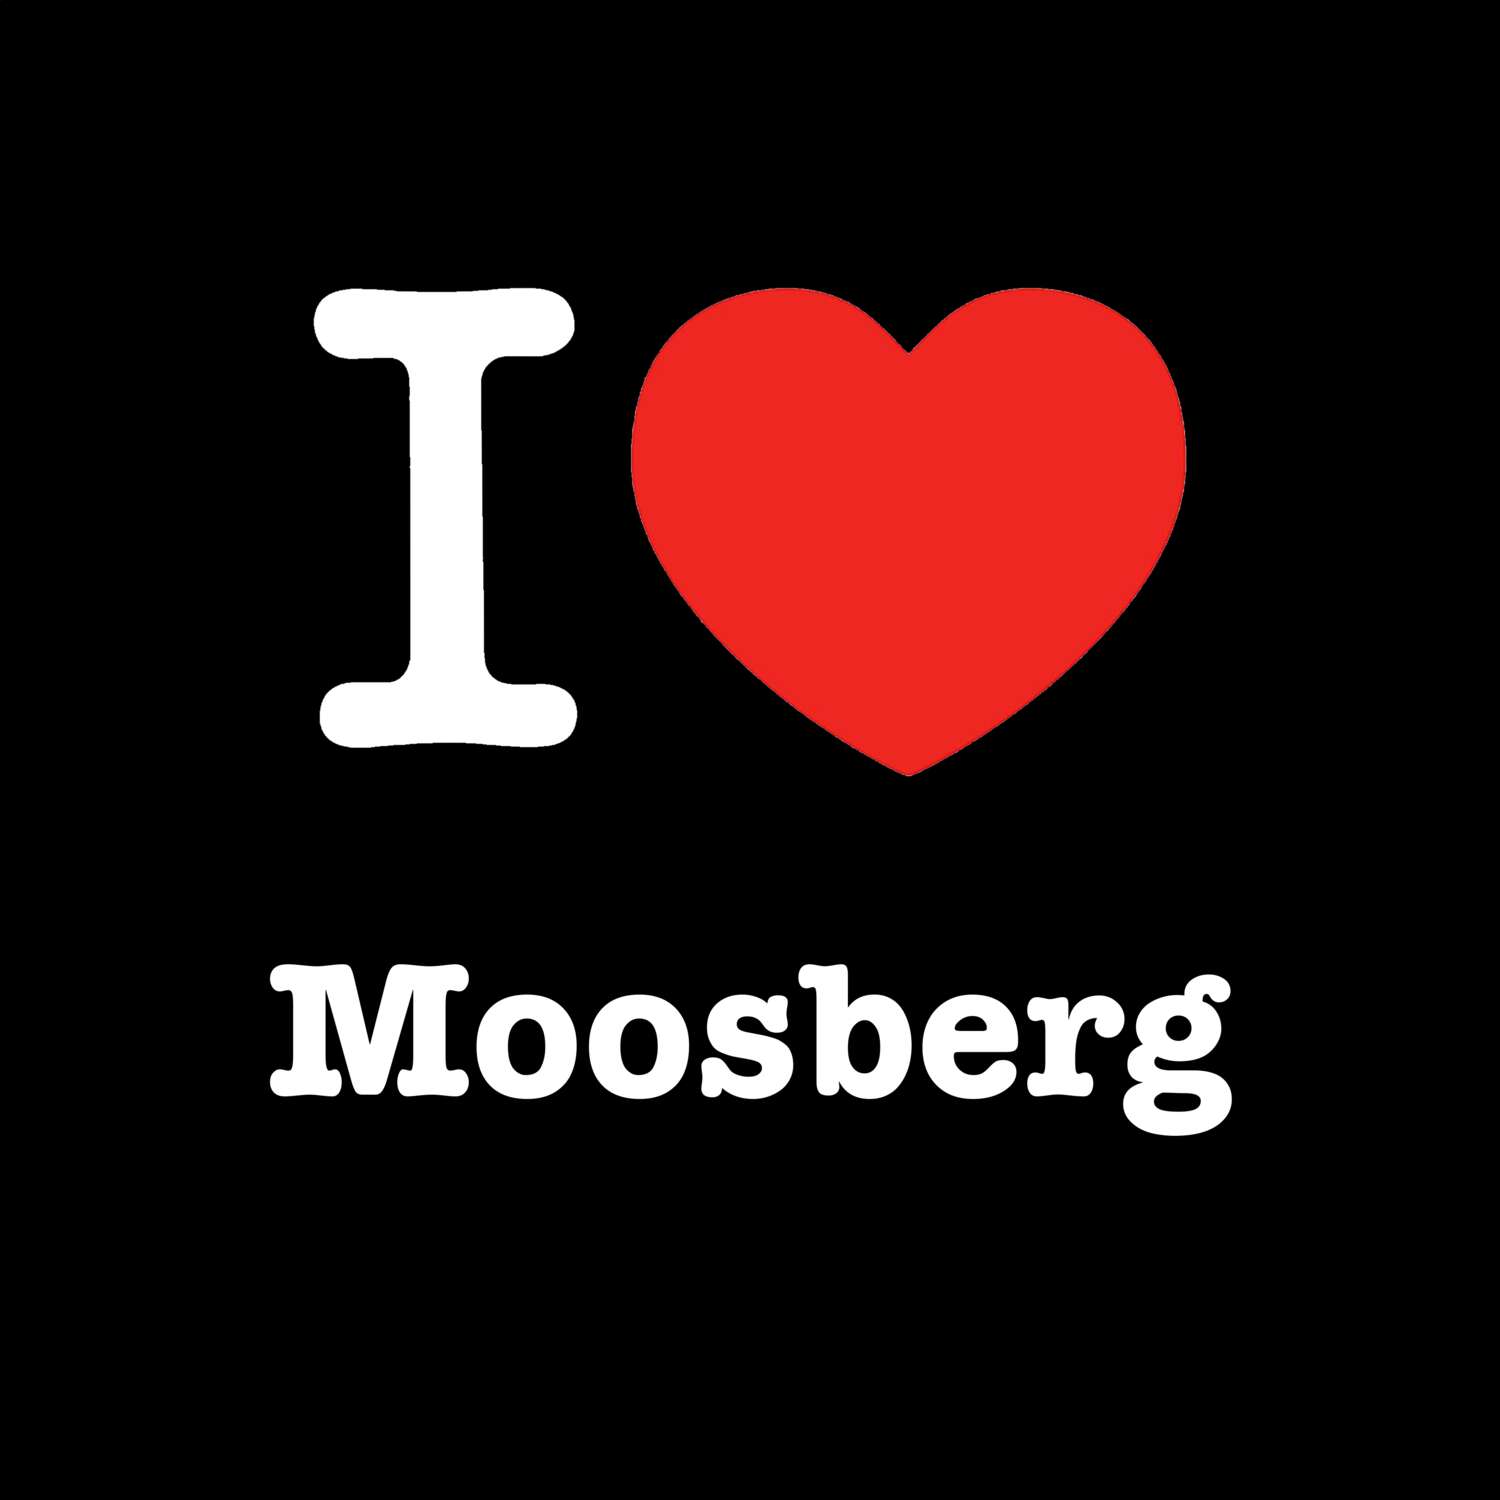 Moosberg T-Shirt »I love«